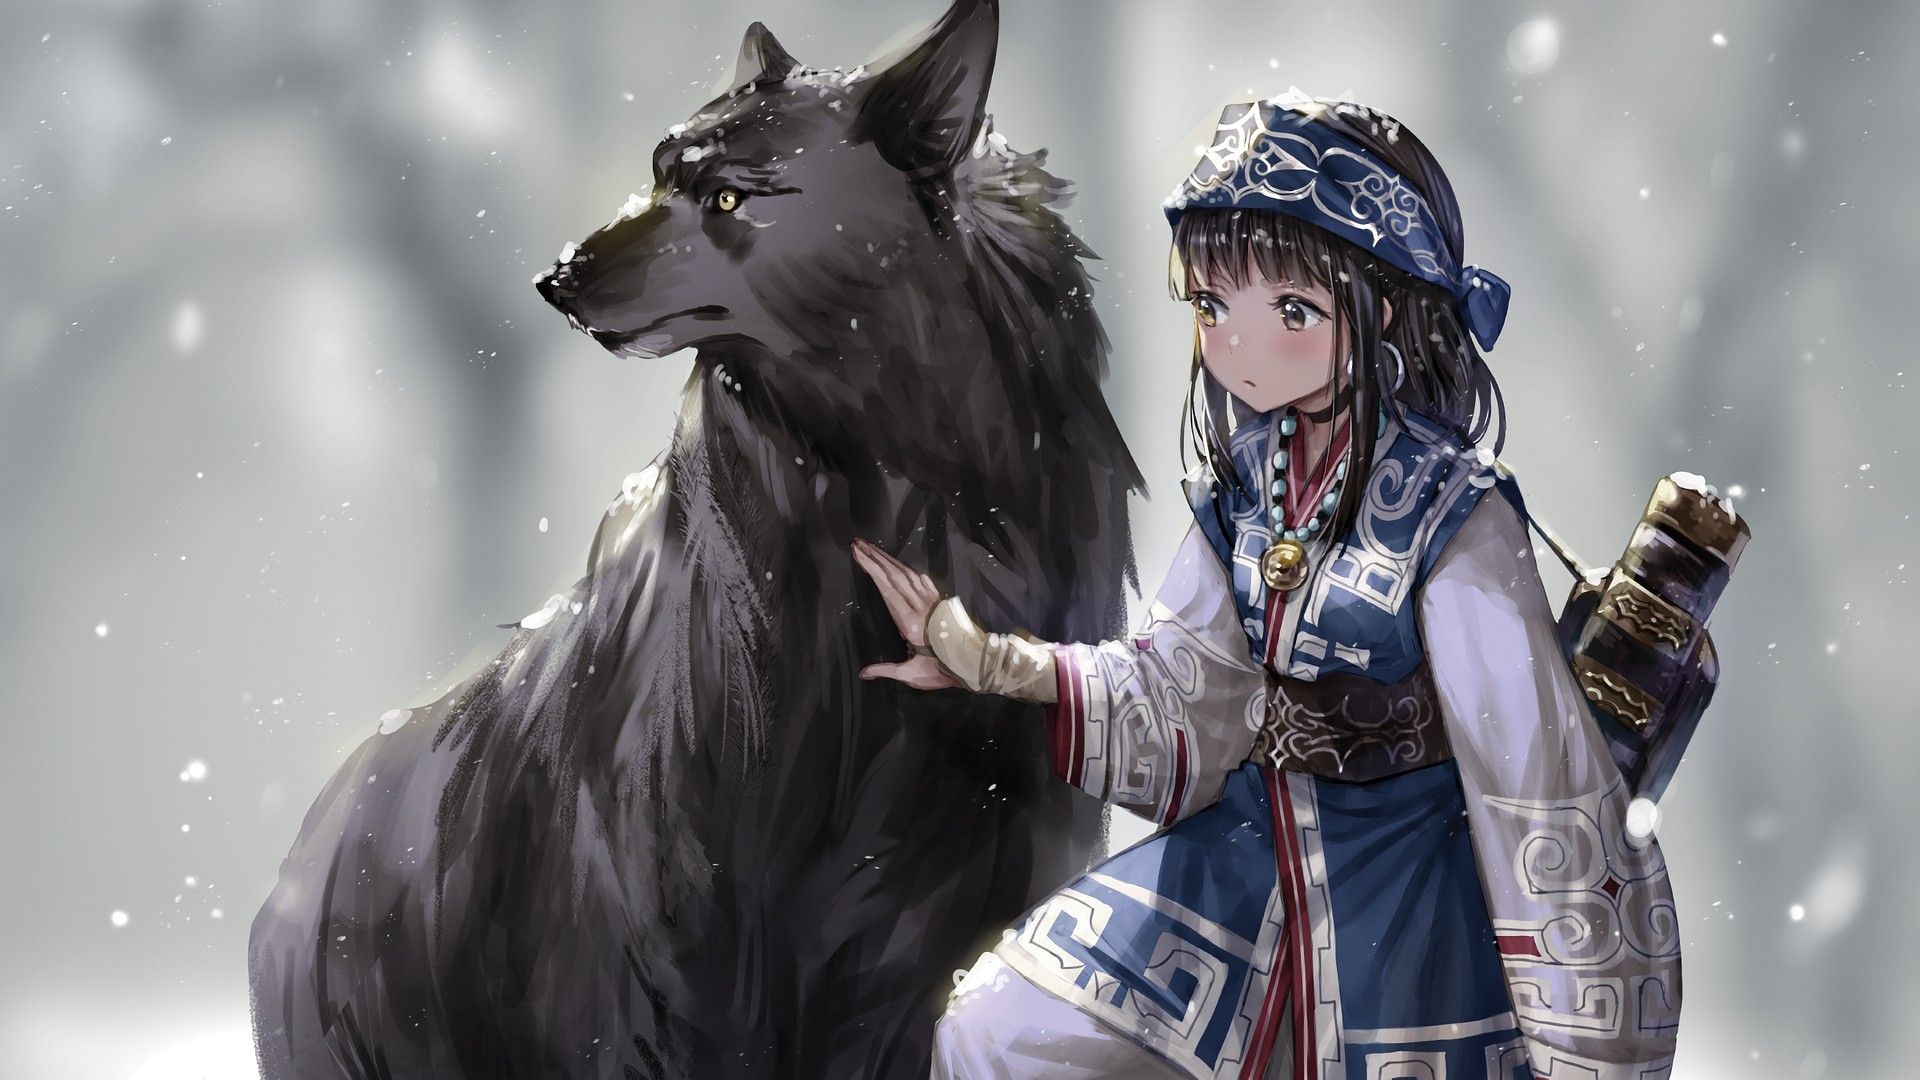 #wolf, #fantasy art, #original characters, #winter, #anime, #snow, #anime girls wallpaper. Mocah.org HD Desktop Wallpaper